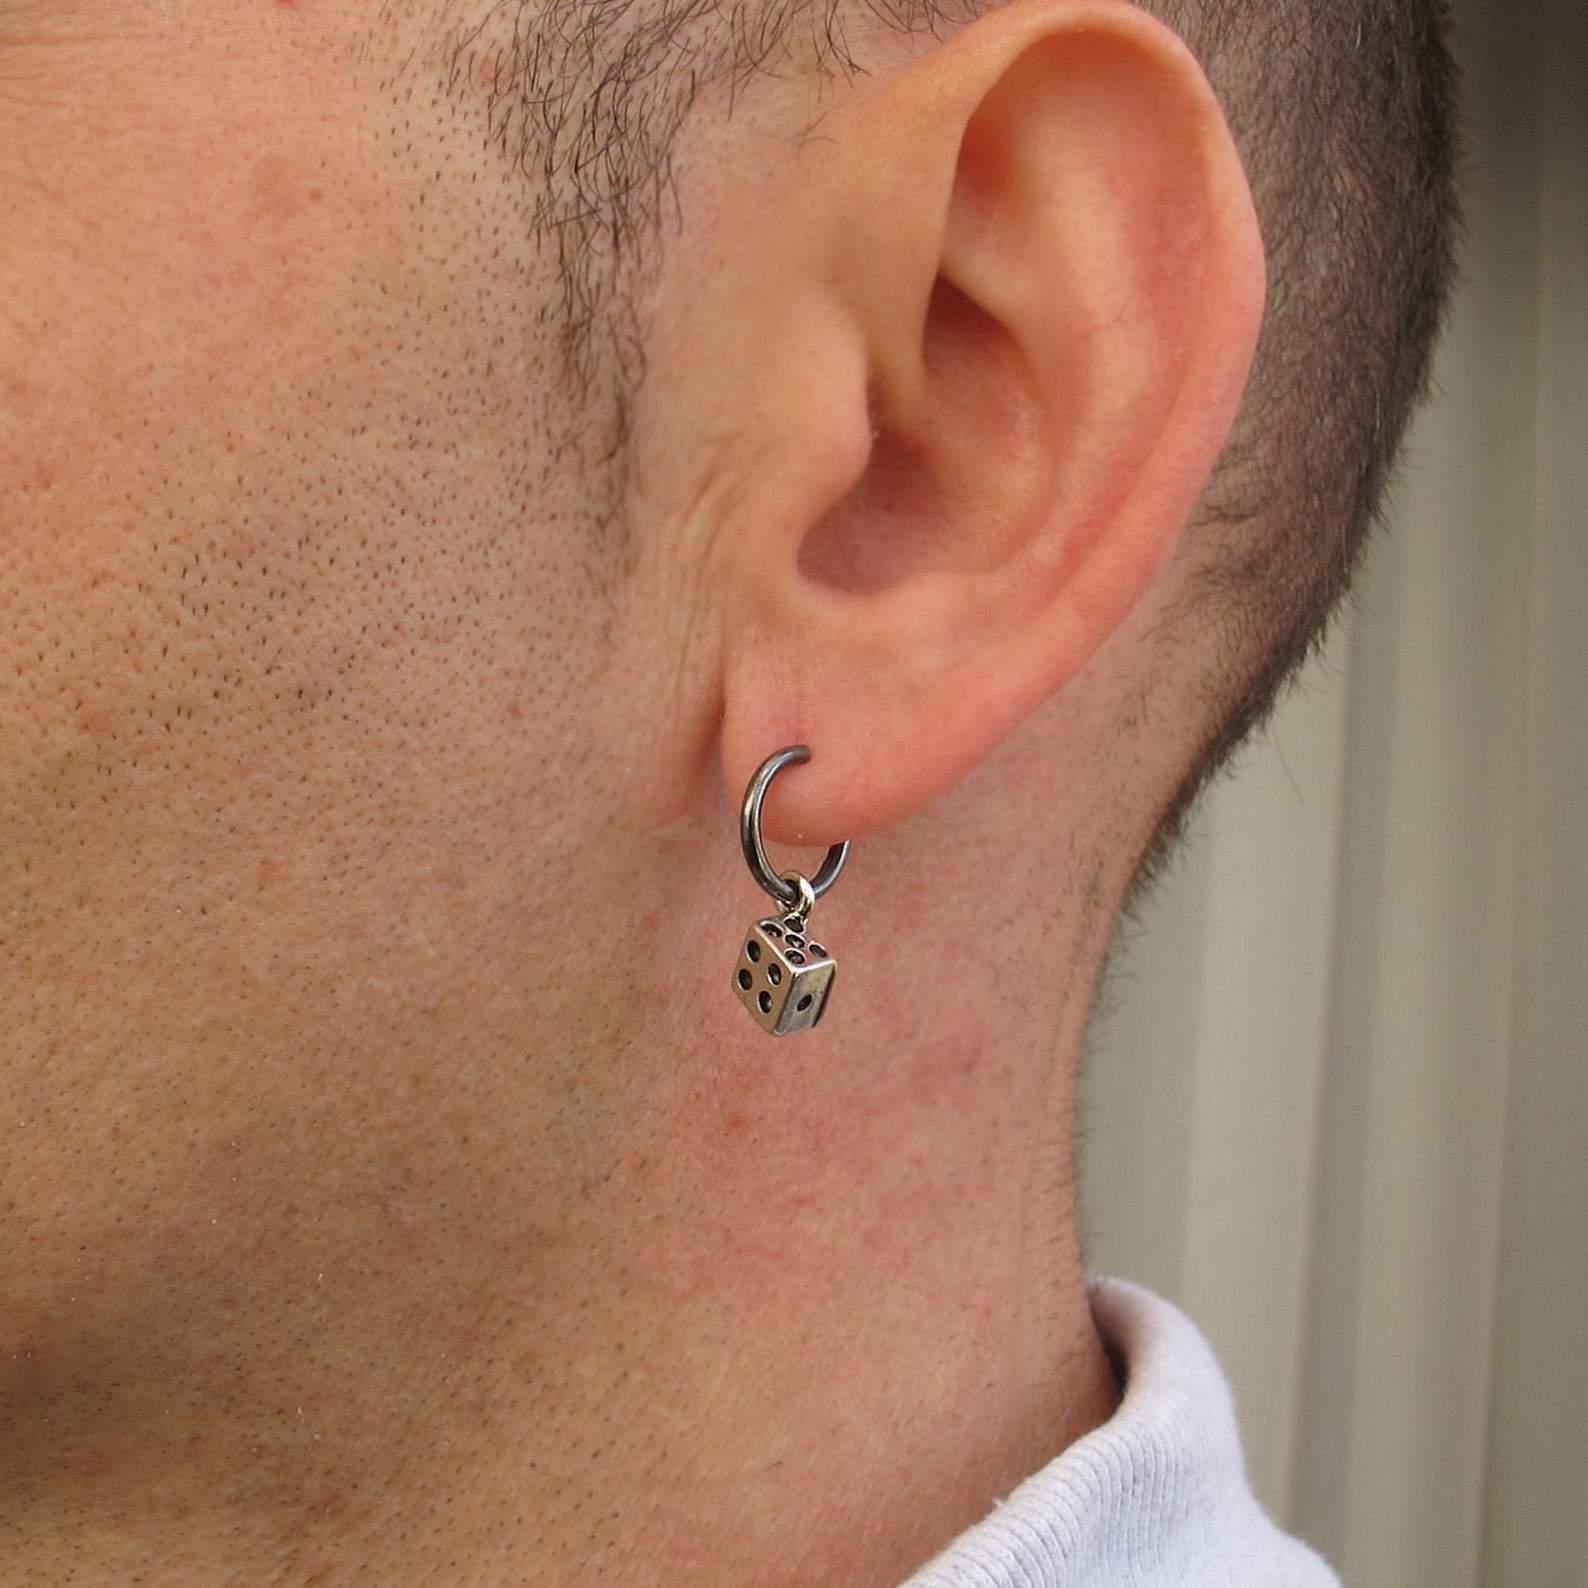 Men's Diamond Earrings, 14ct White Solid Gold Diamond Stud Earrings, Prong  Setting Diamond Studs, 0.27ct G Color Diamond Men Earrings - Etsy | Mens  diamond earrings, Mens diamond stud earrings, Diamond earrings studs